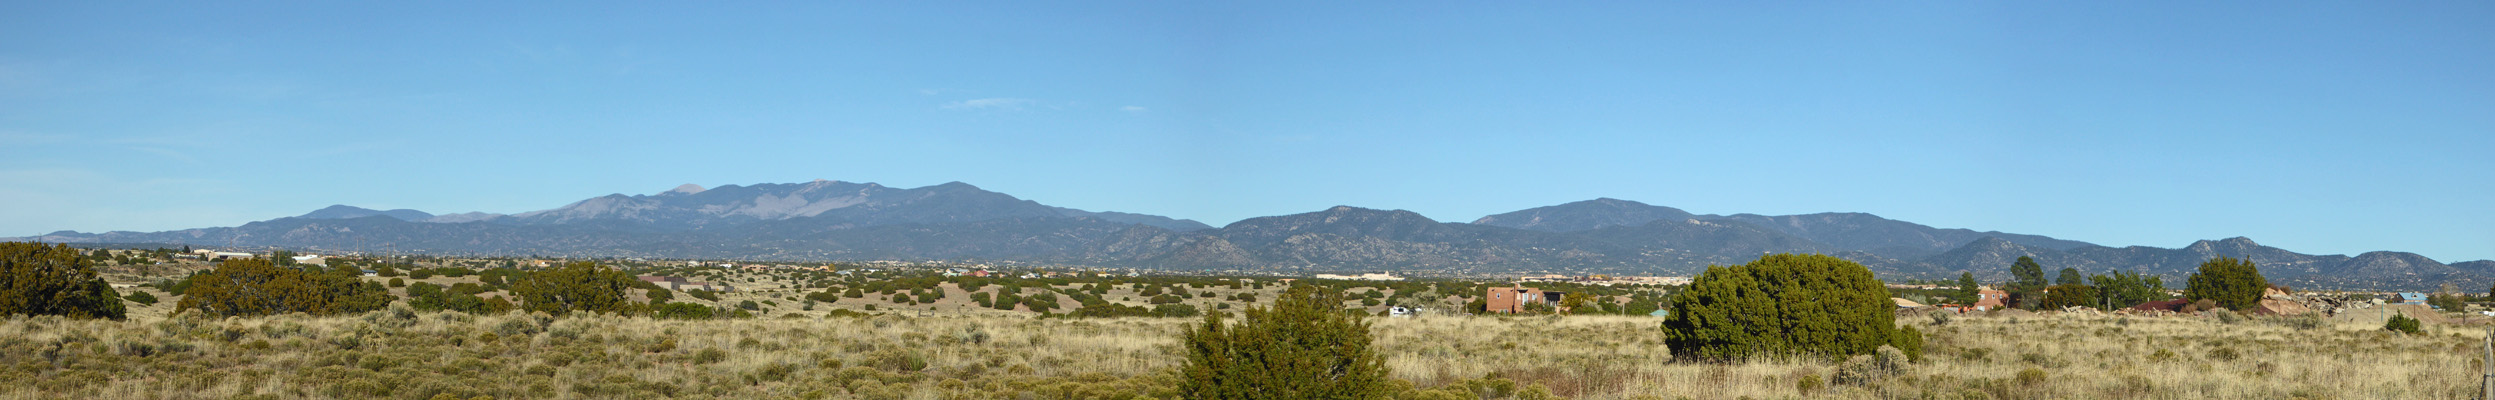 View from Santa Fe Skies RV Park